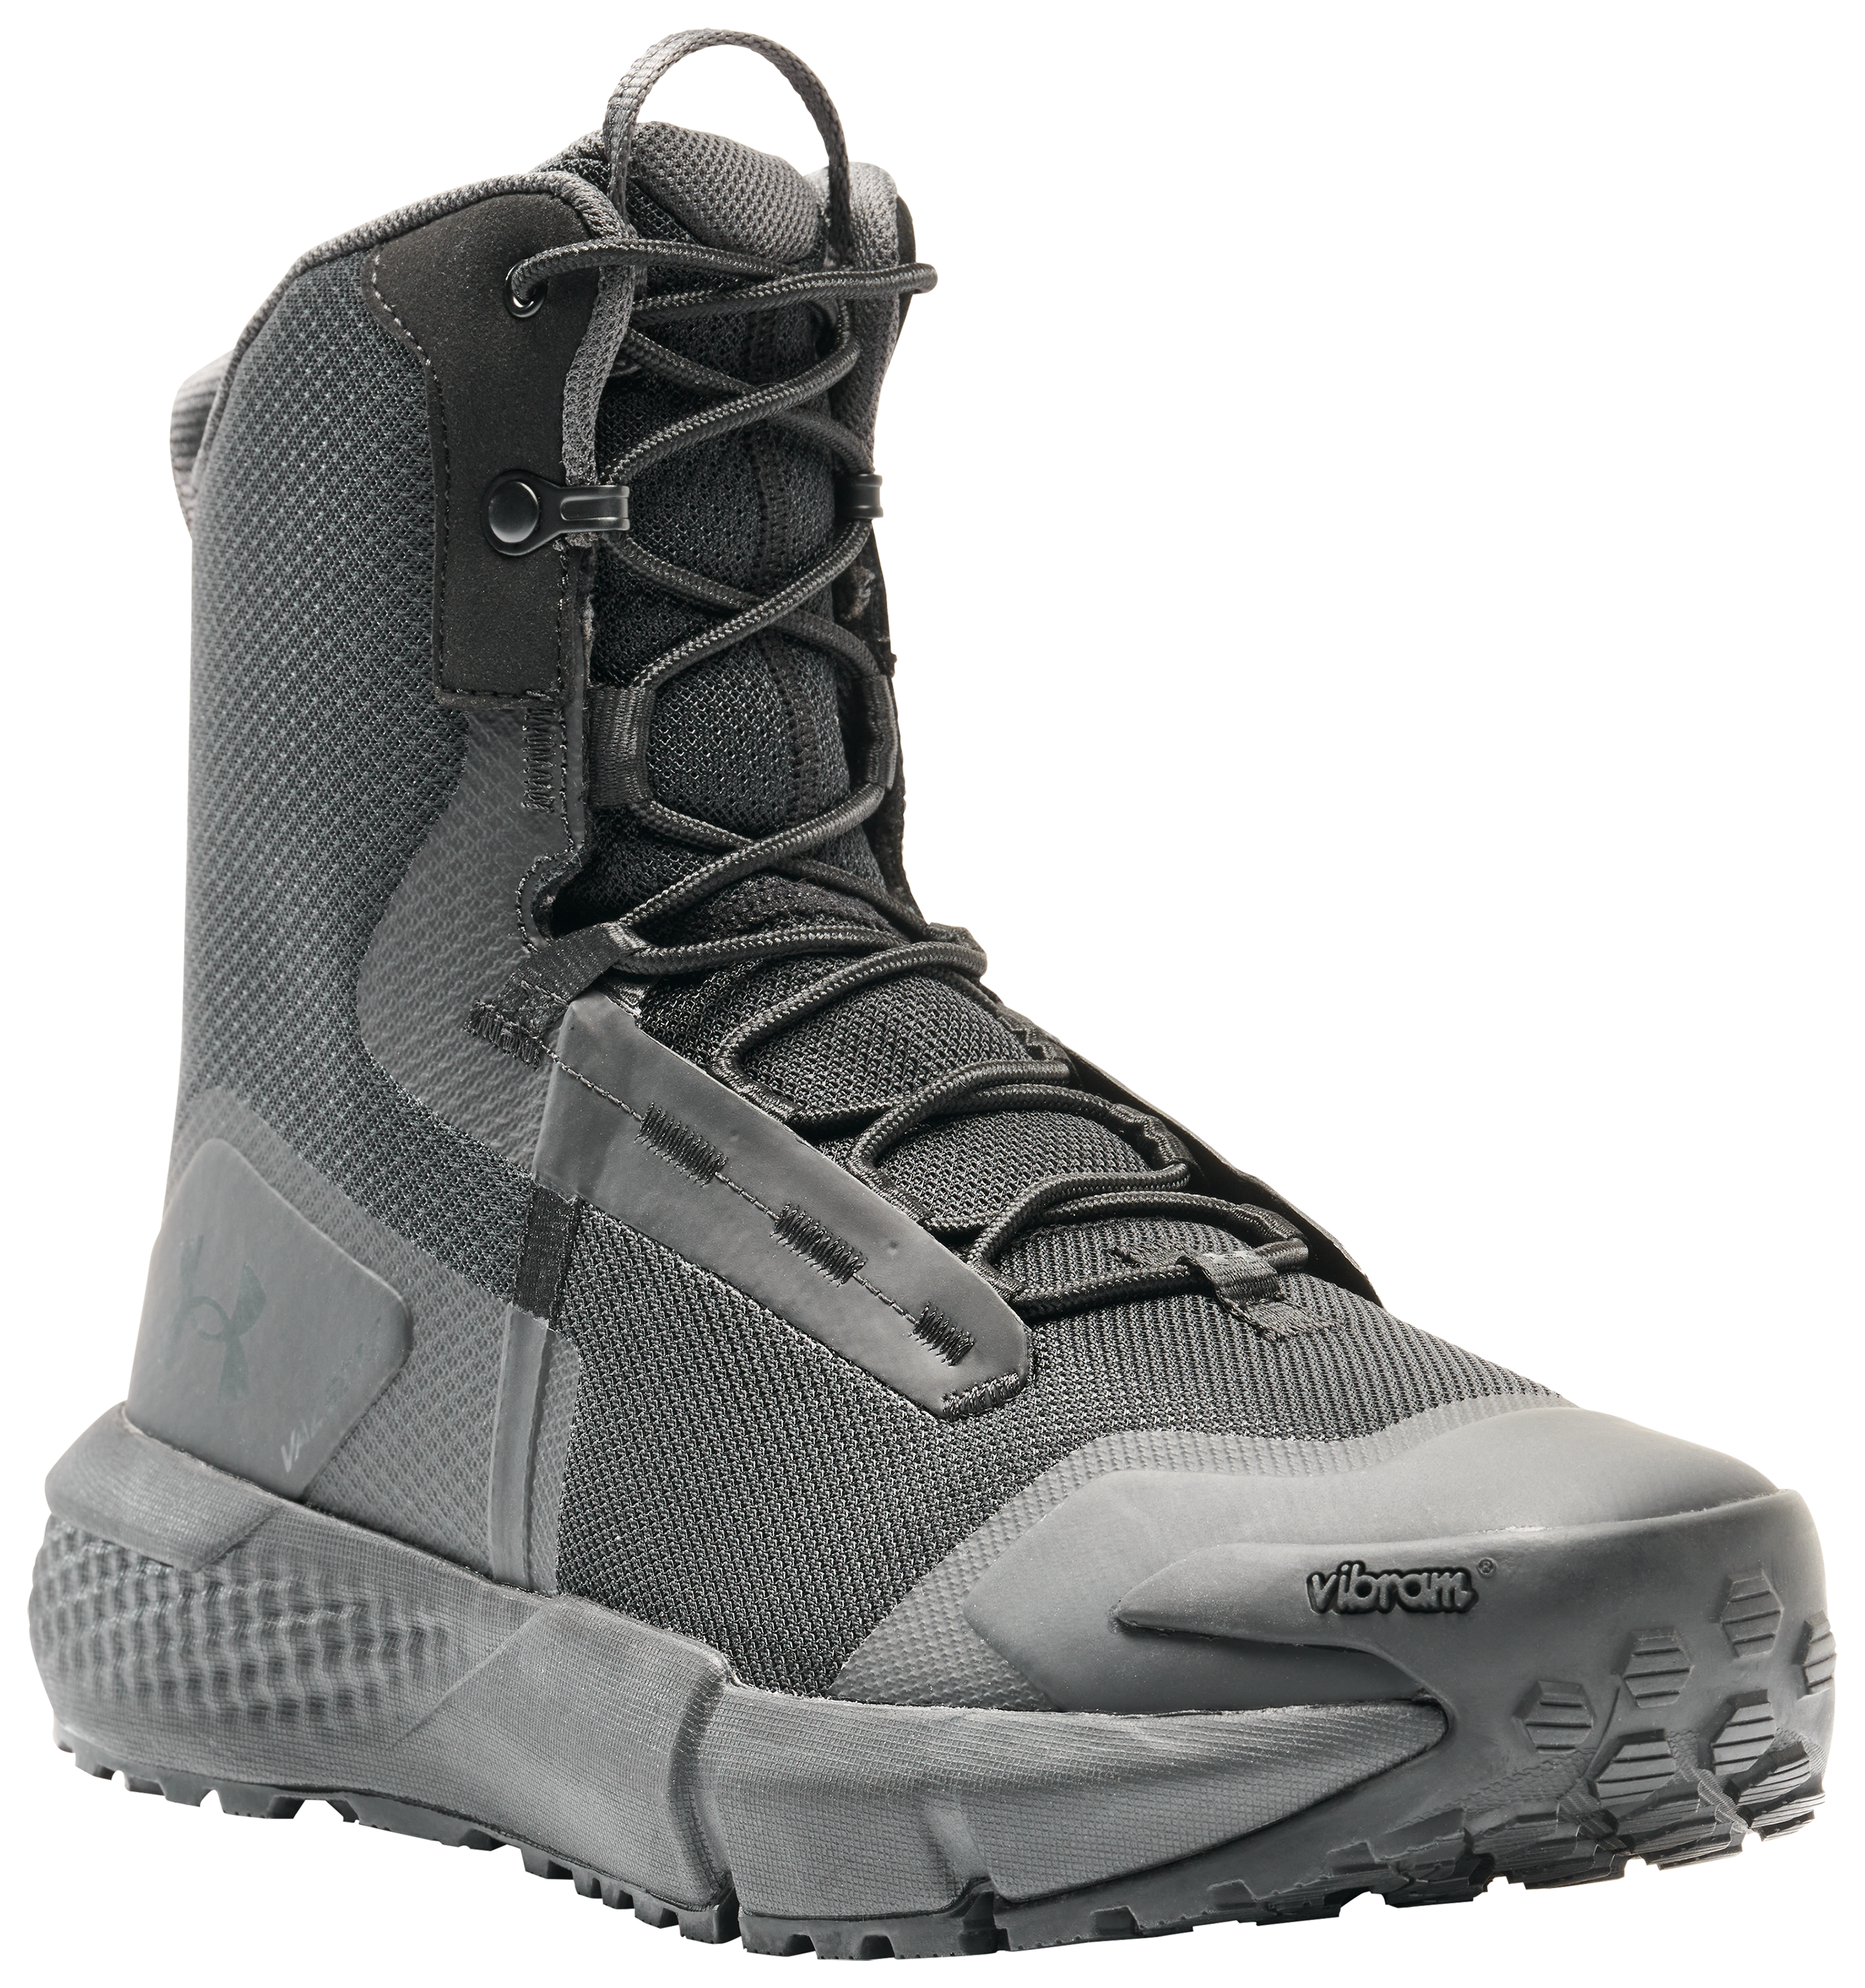 Under Armour Valsetz Side Zip Tactical Boots for Men - Black - 8M